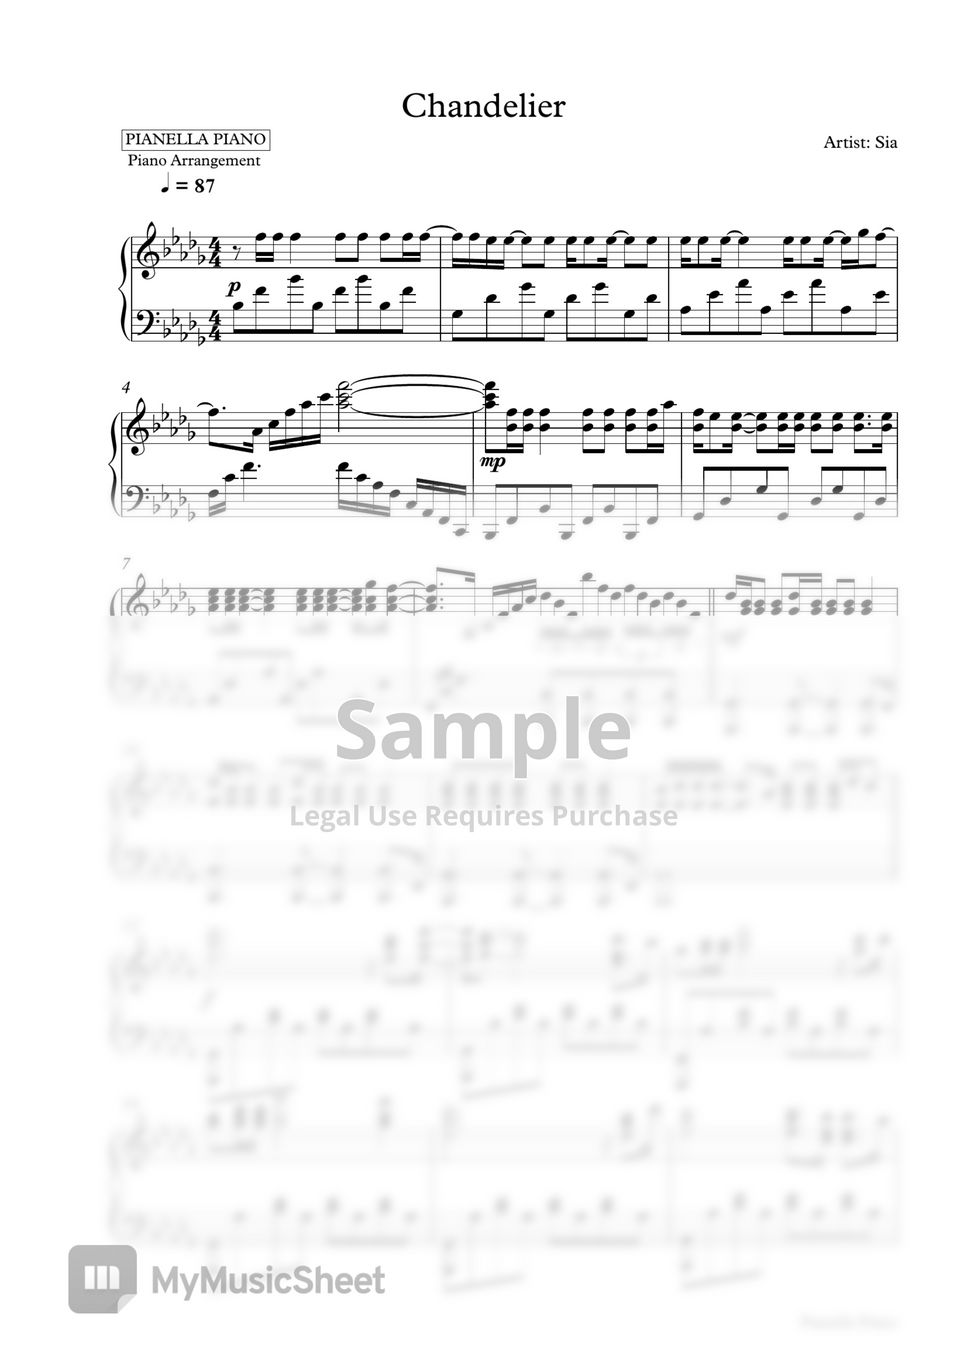 Sia - Chandelier (Piano Sheet) by Pianella Piano